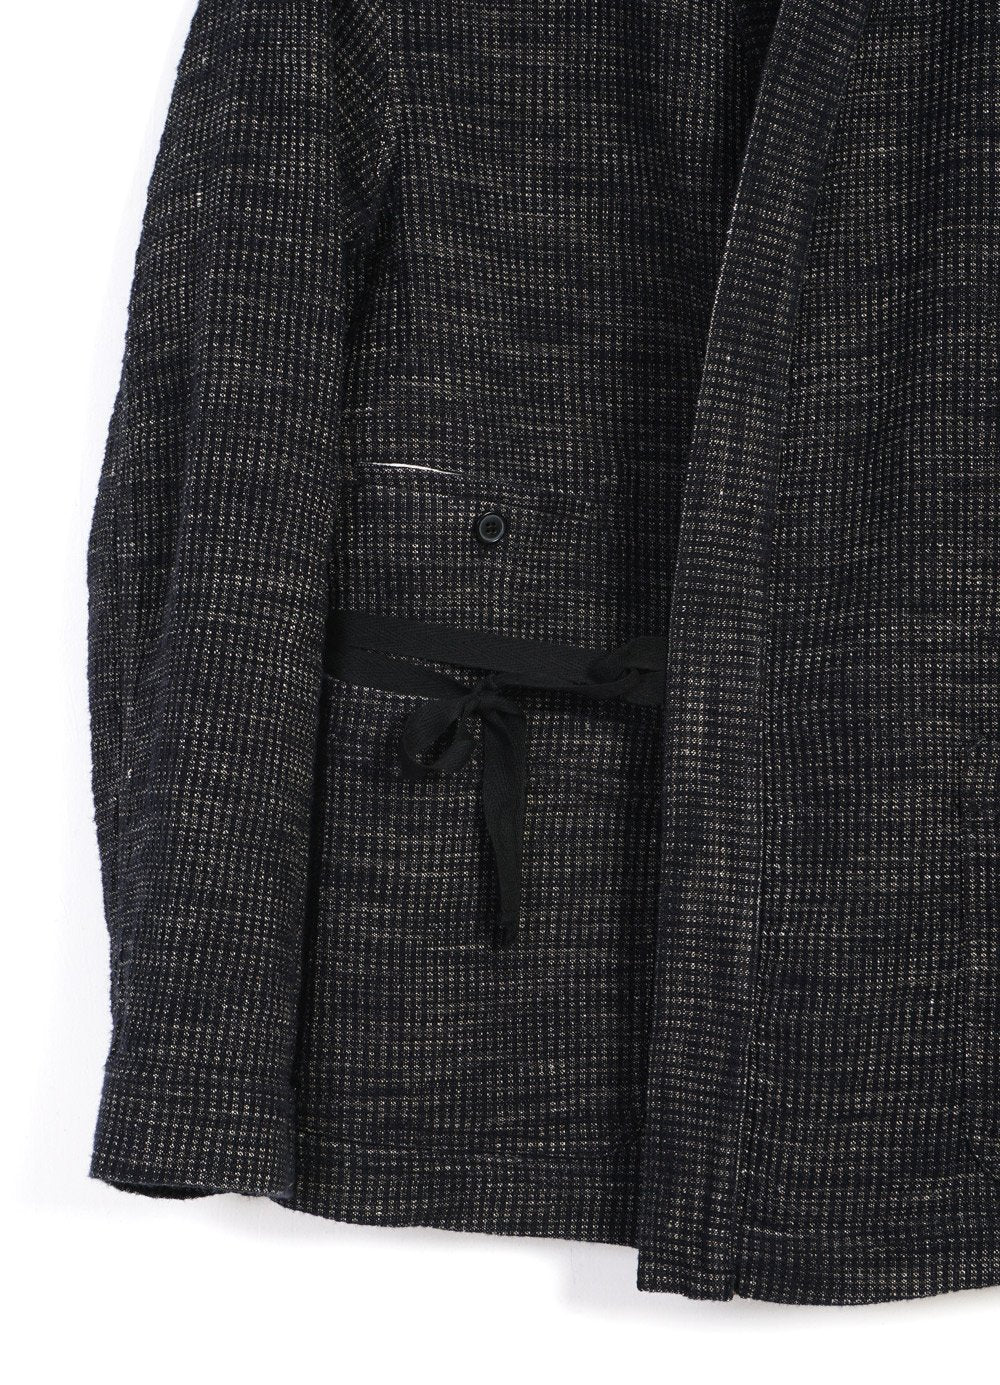 HANSEN GARMENTS - FOLKE | Scarecrow´s Jacket | Black Hemp - HANSEN Garments